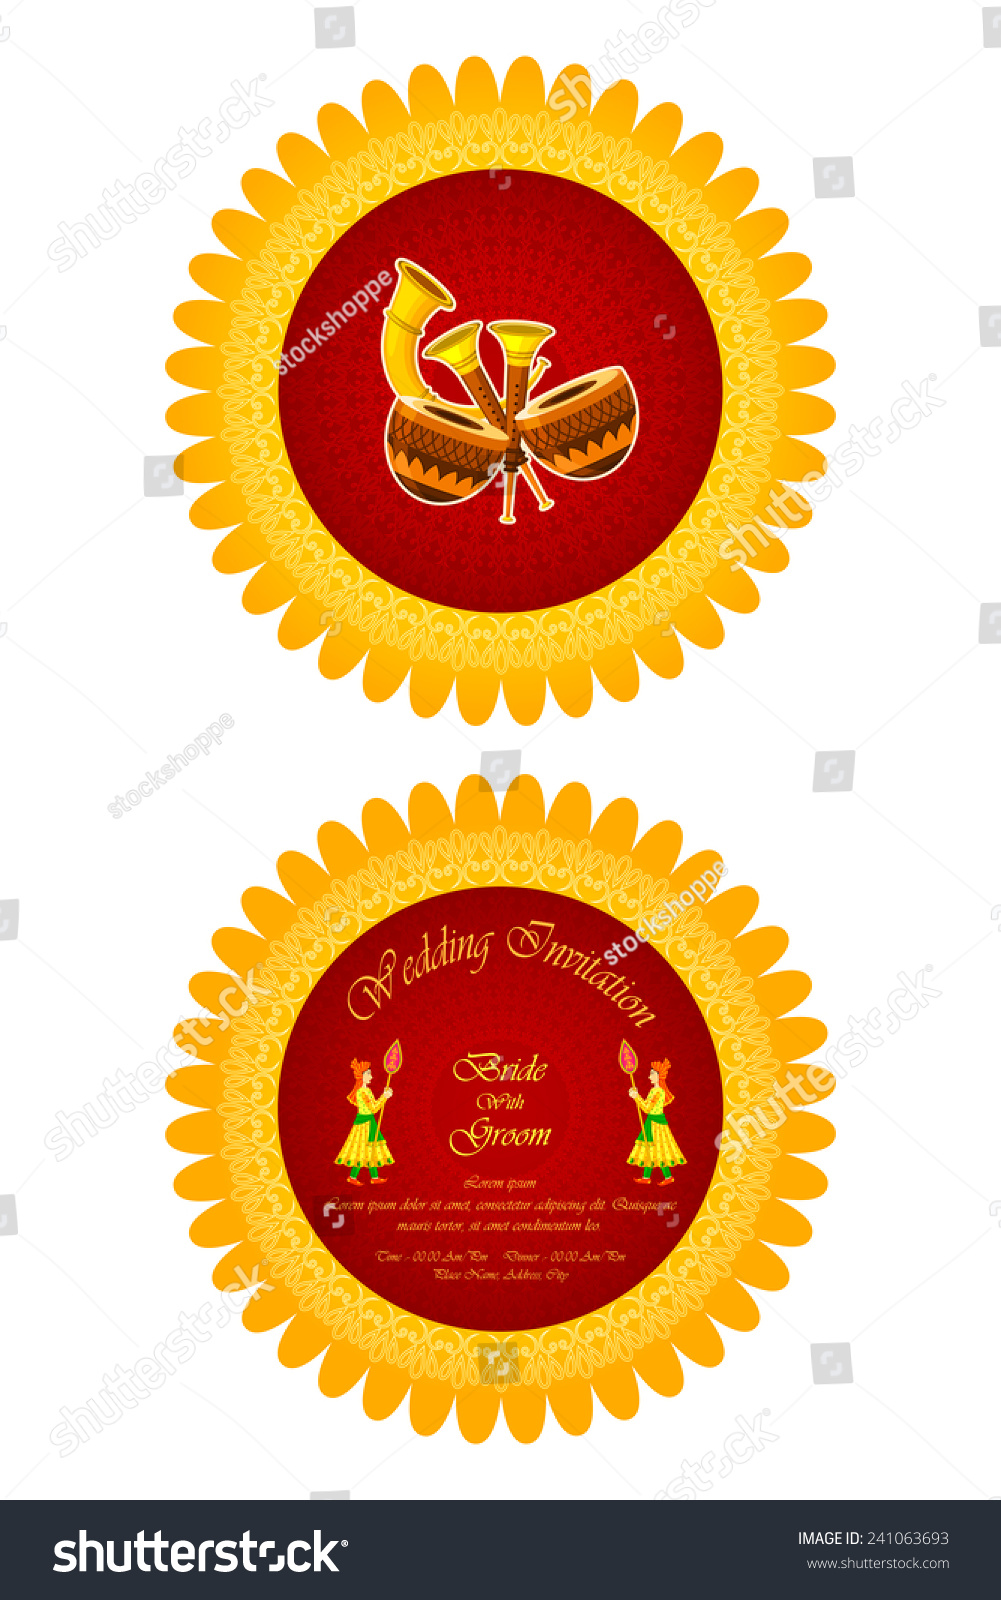 Indian wedding invitations vector